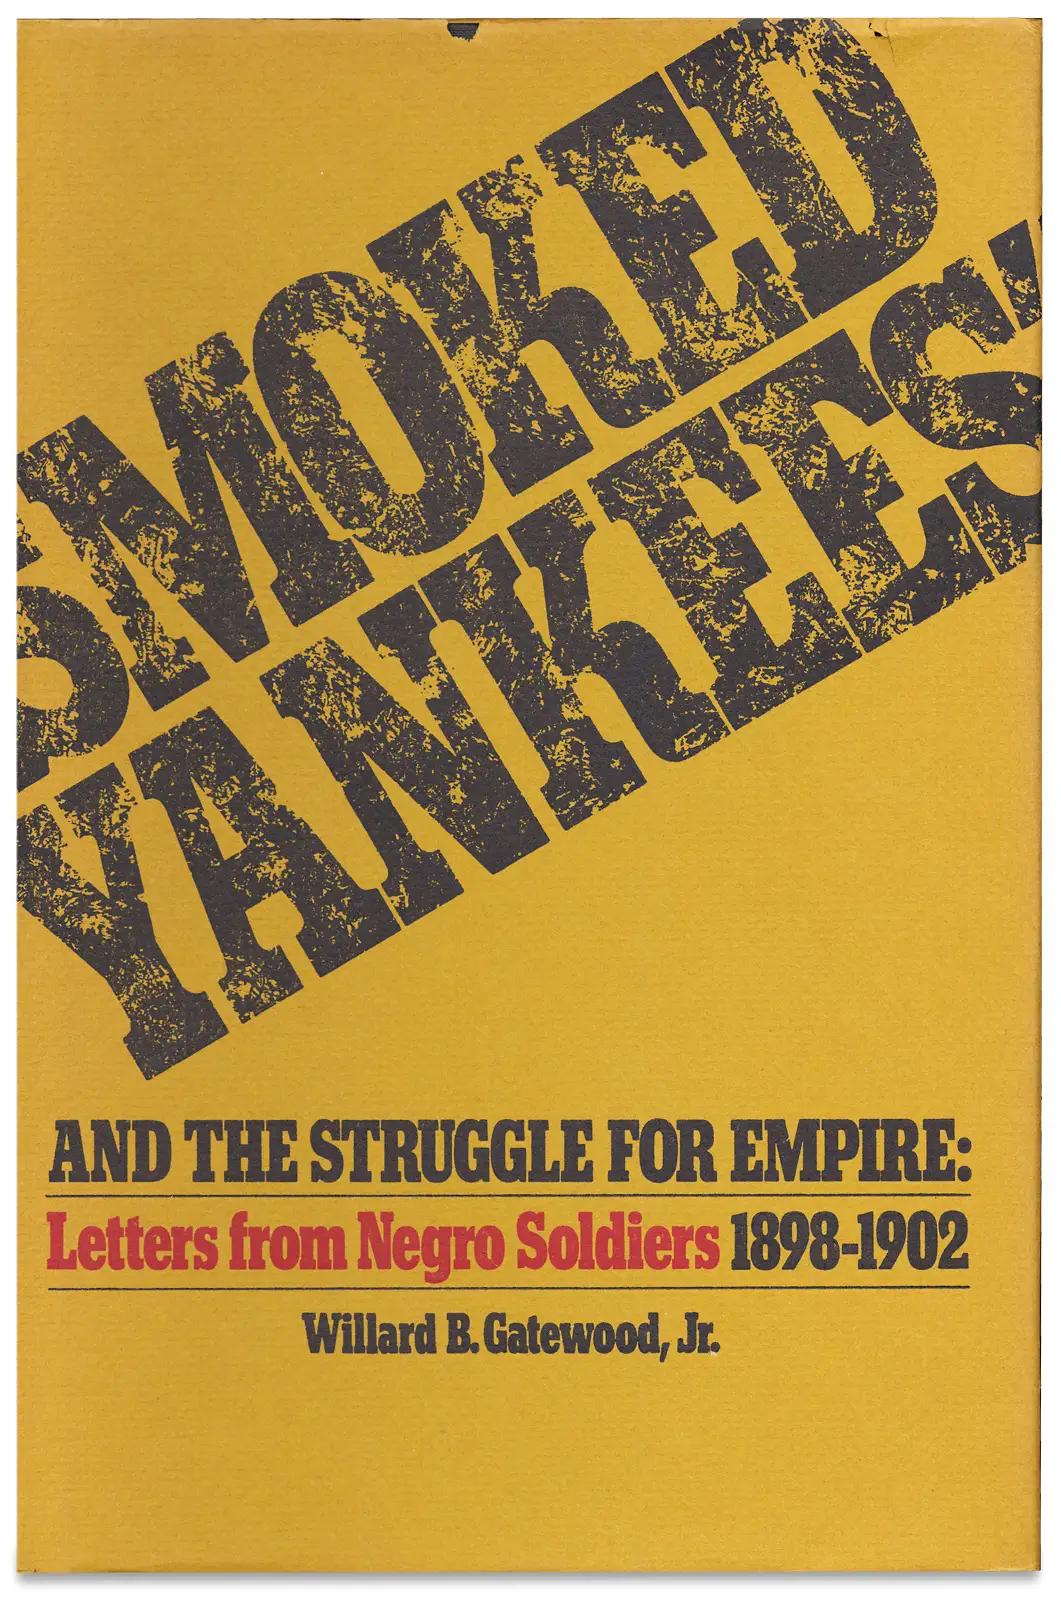 smoked yankees - Were Smoked Yankees black soldiers in the Spanish-American War